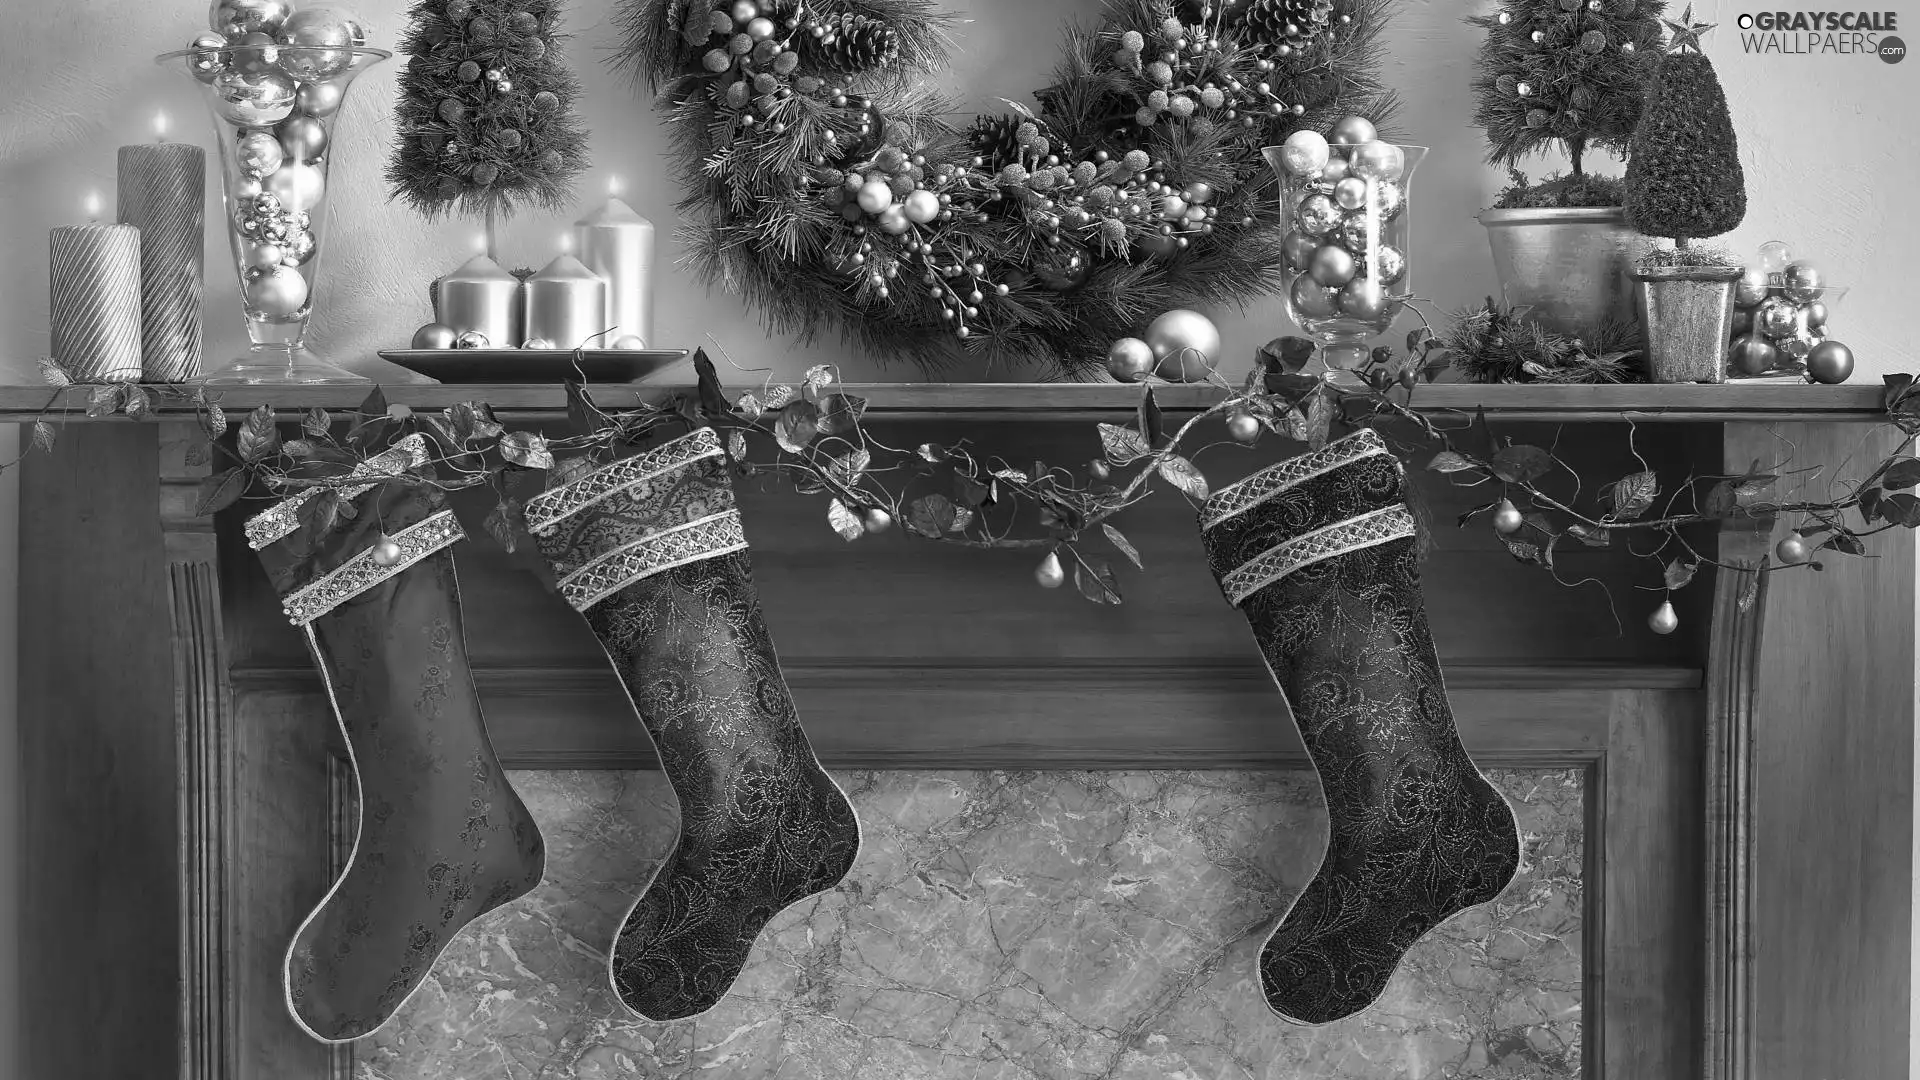 decoration, Christmas, Candles, wreath, socks